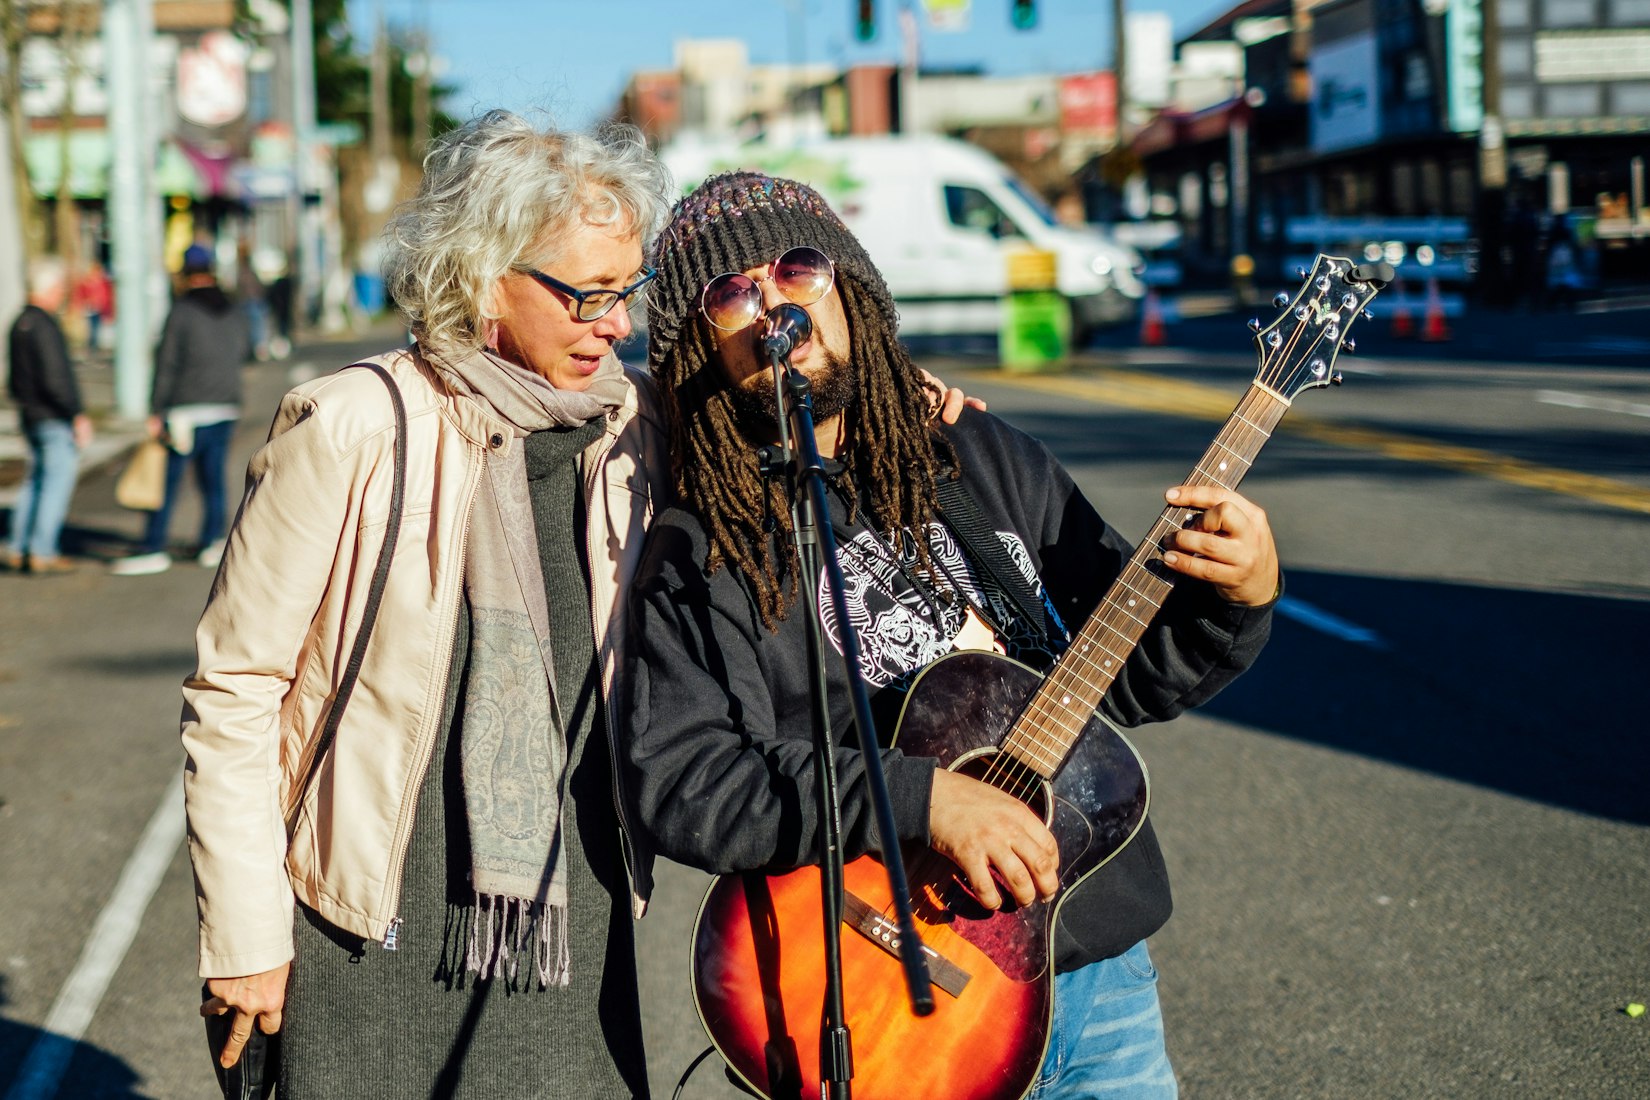 Two people singing on street